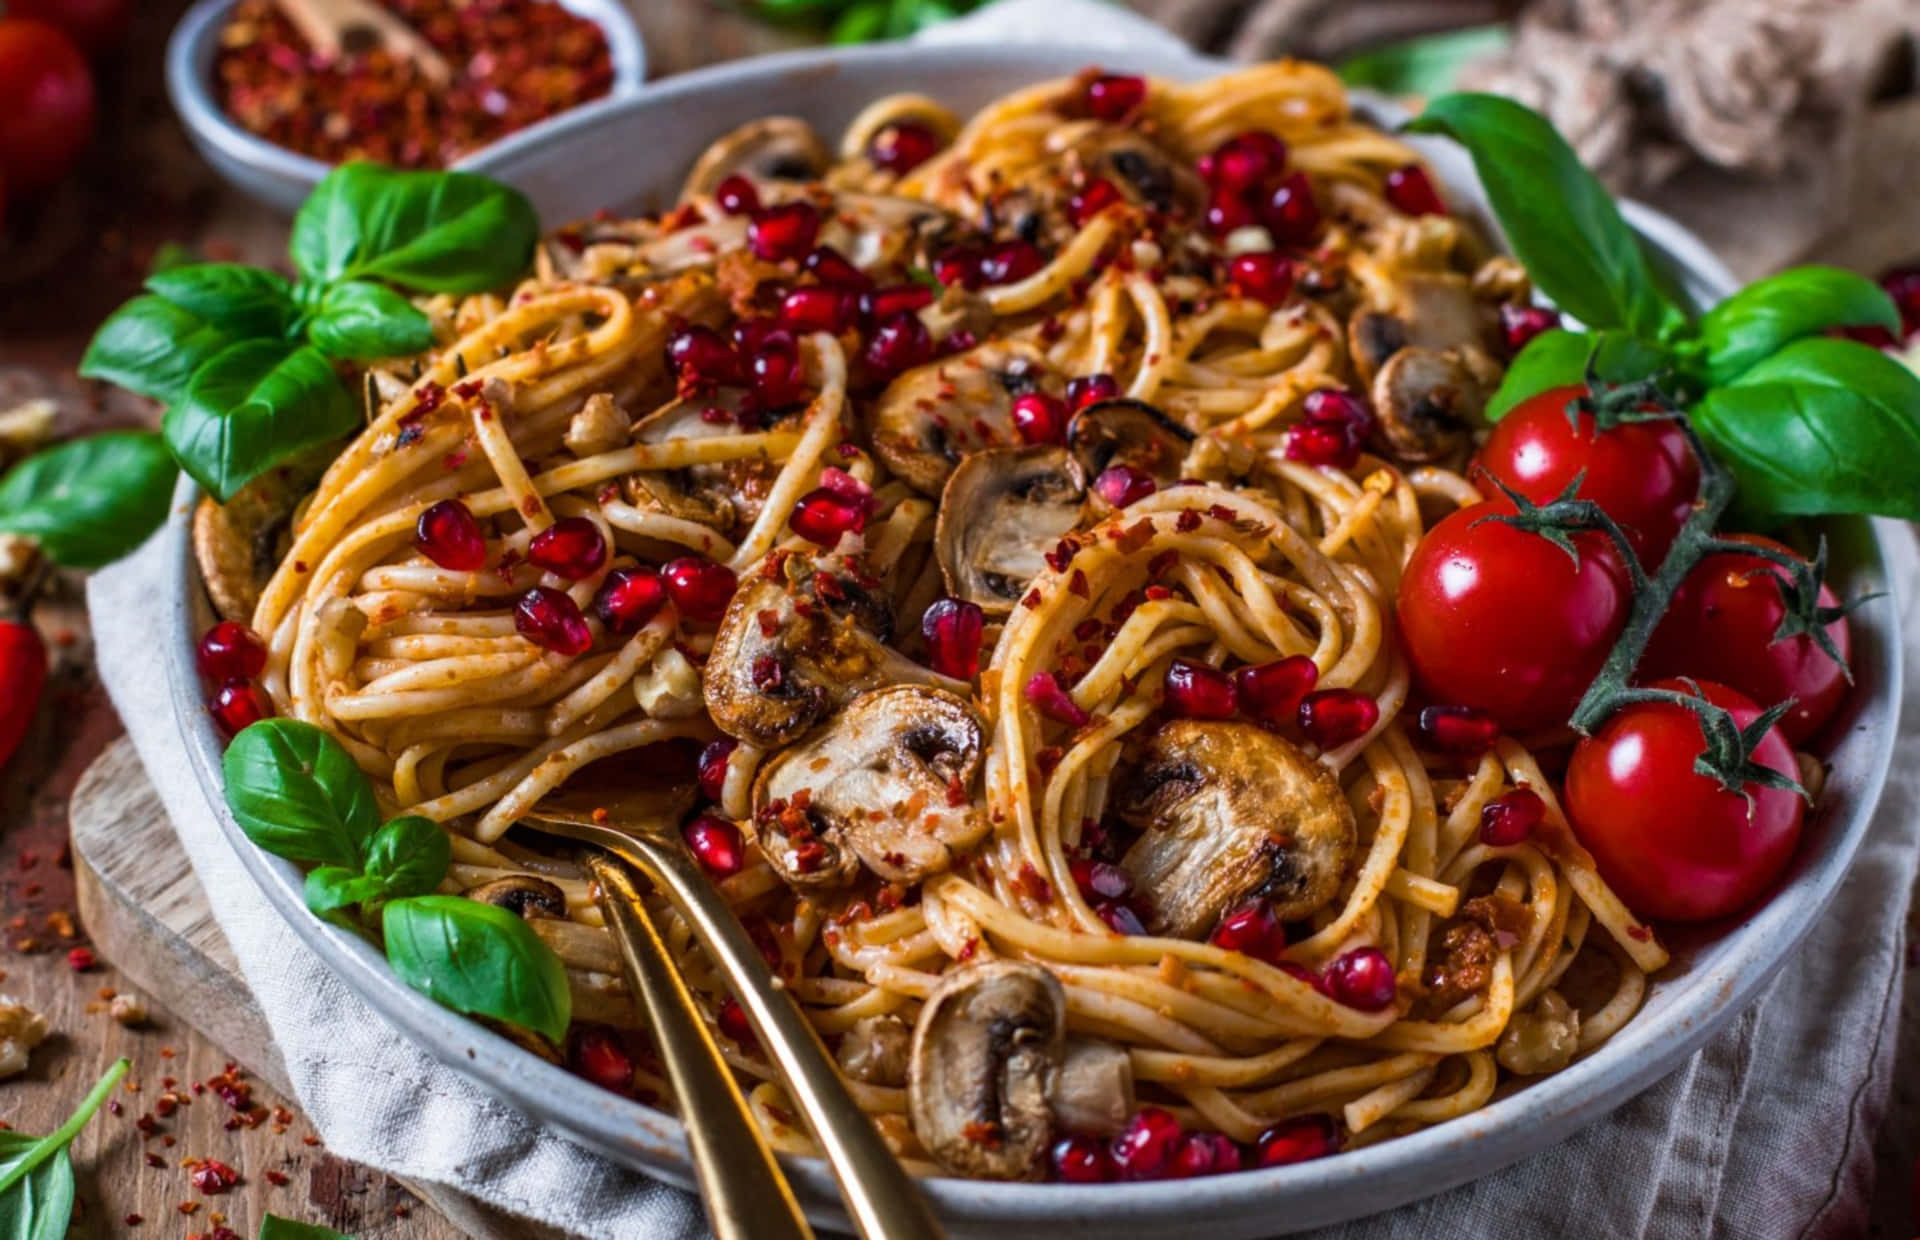 Spaghetti With Mushrooms, Tomatoes And Basil